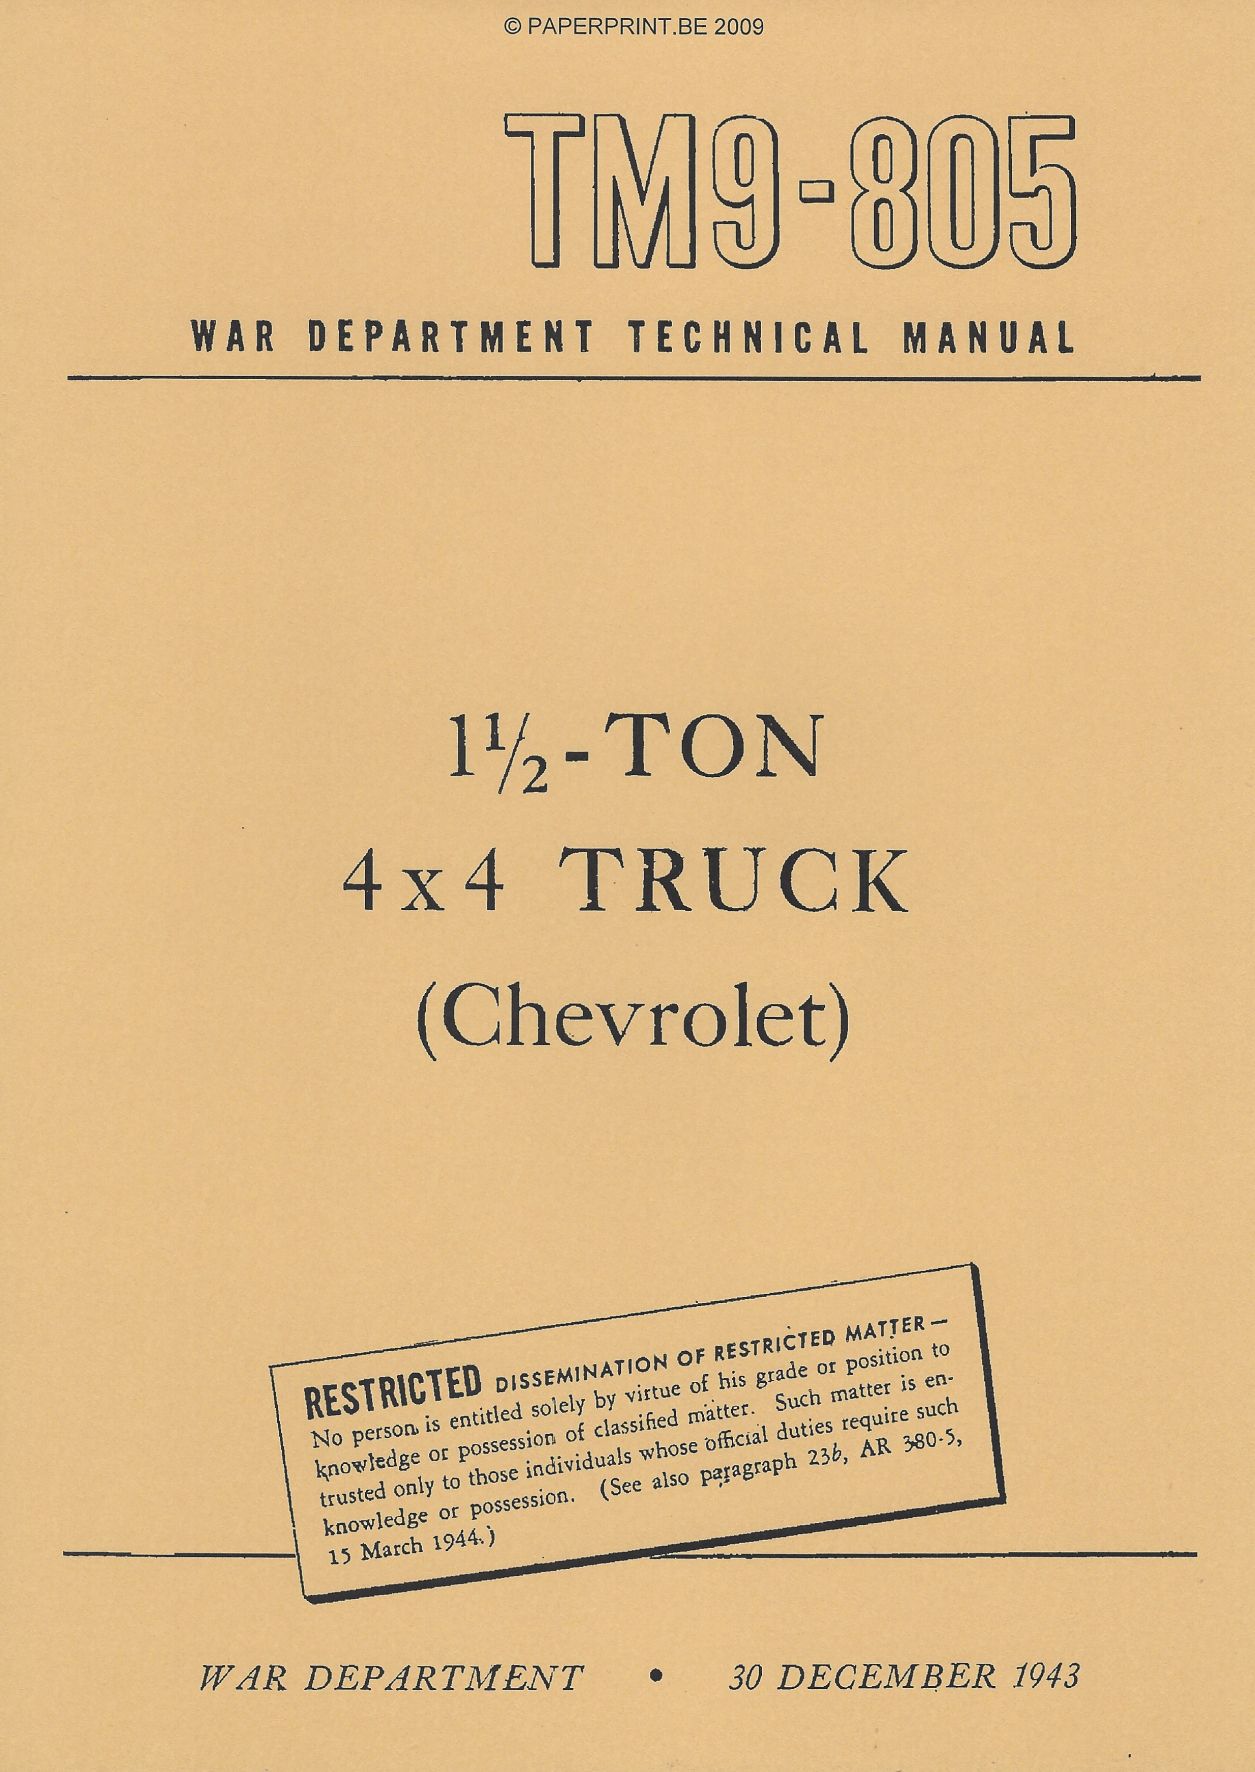 TM 9-805 US 1 ½ - TON 4x4 TRUCK (CHEVROLET)